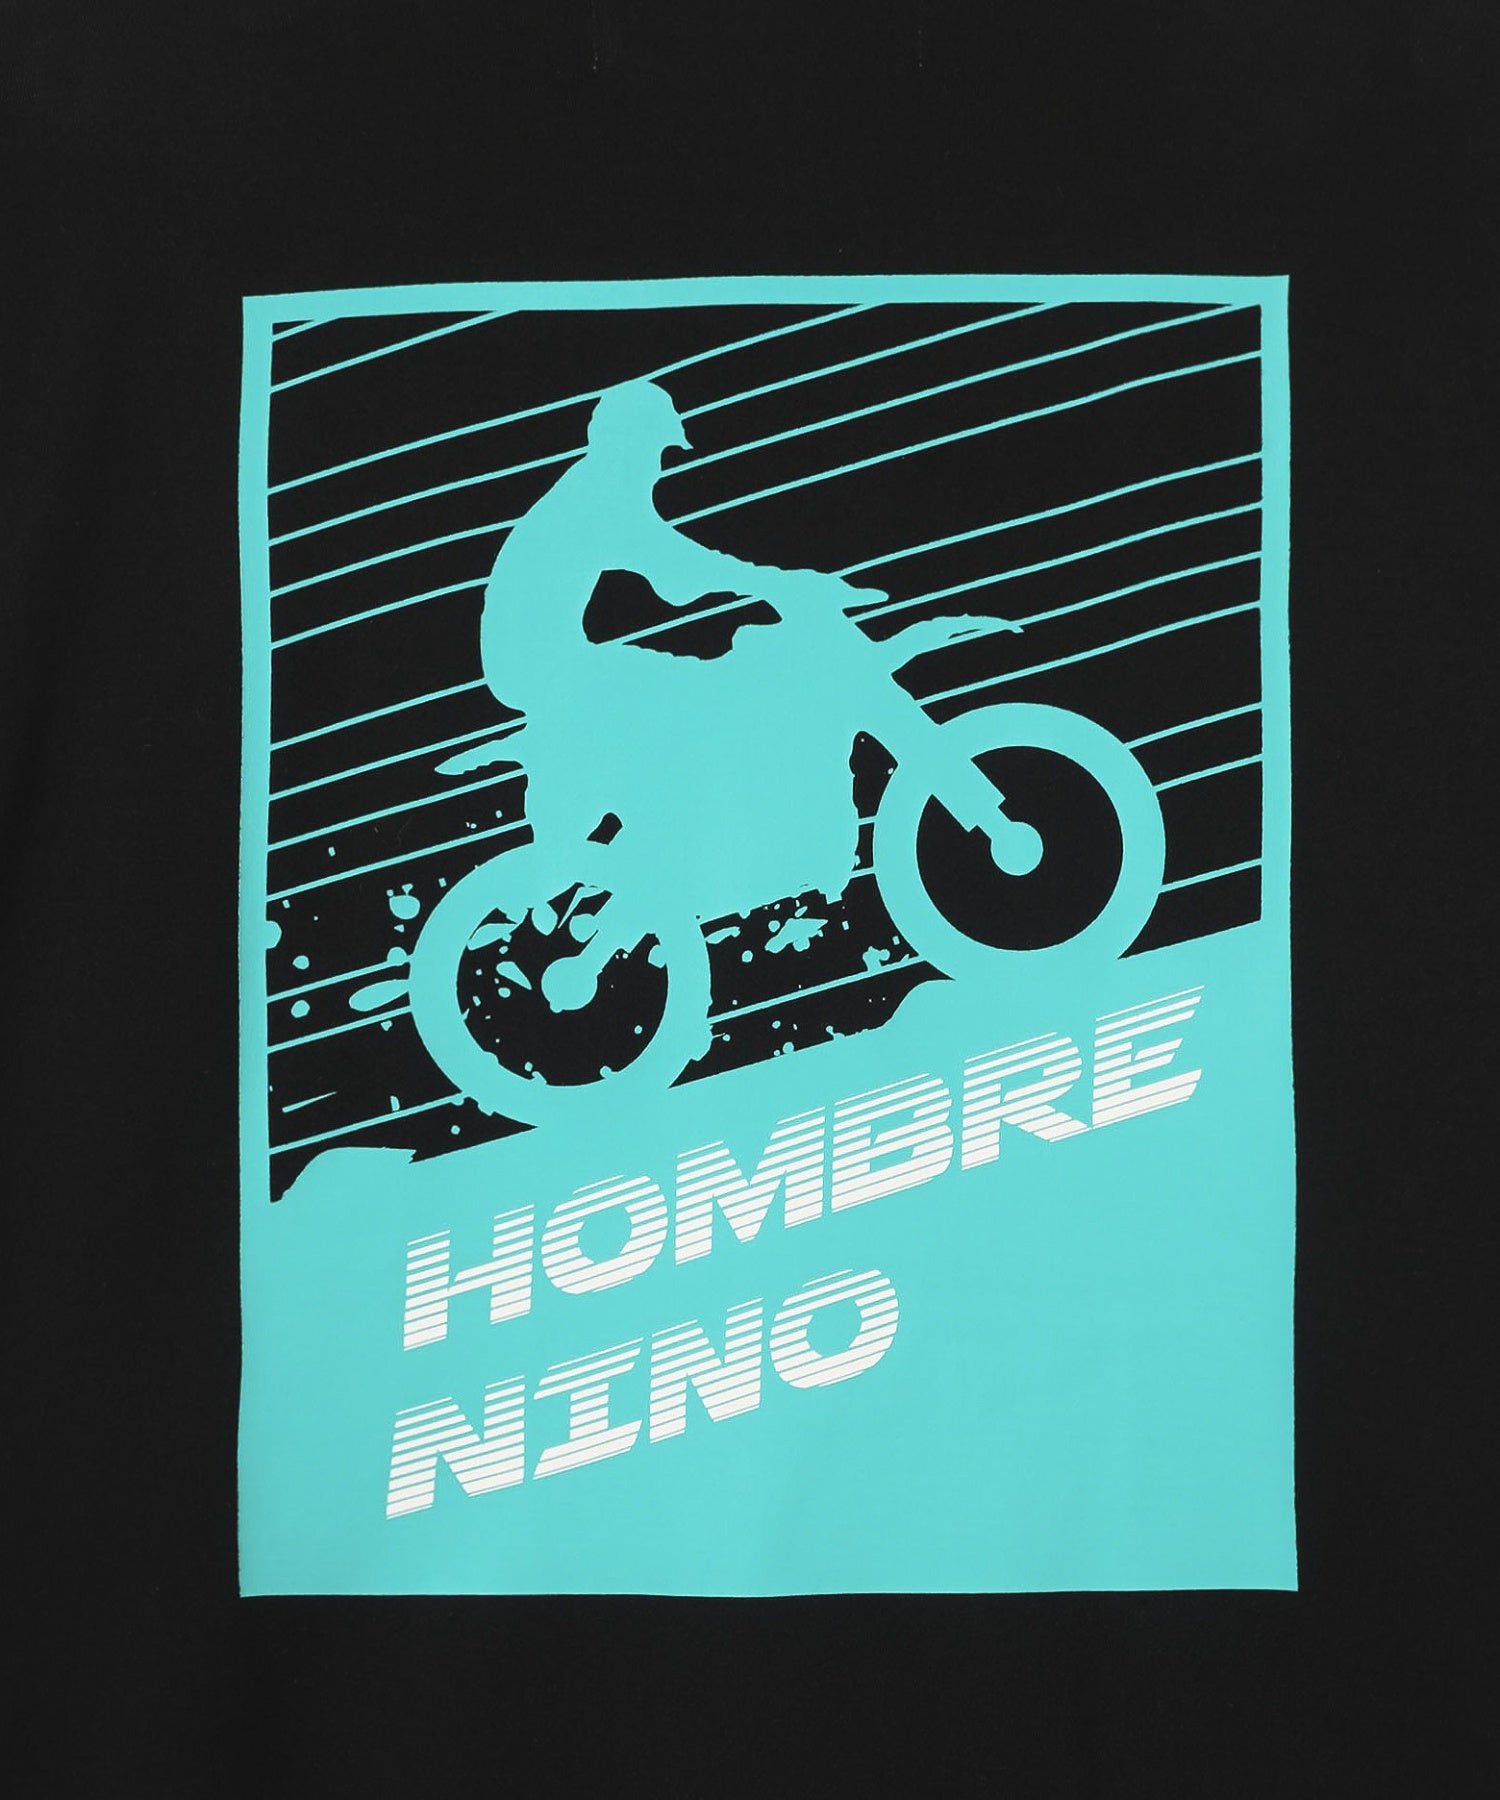 Hombre Nino/オンブレニーニョ/L/S PRINT TEE/MOTOCROSS/HN0241-CT0008